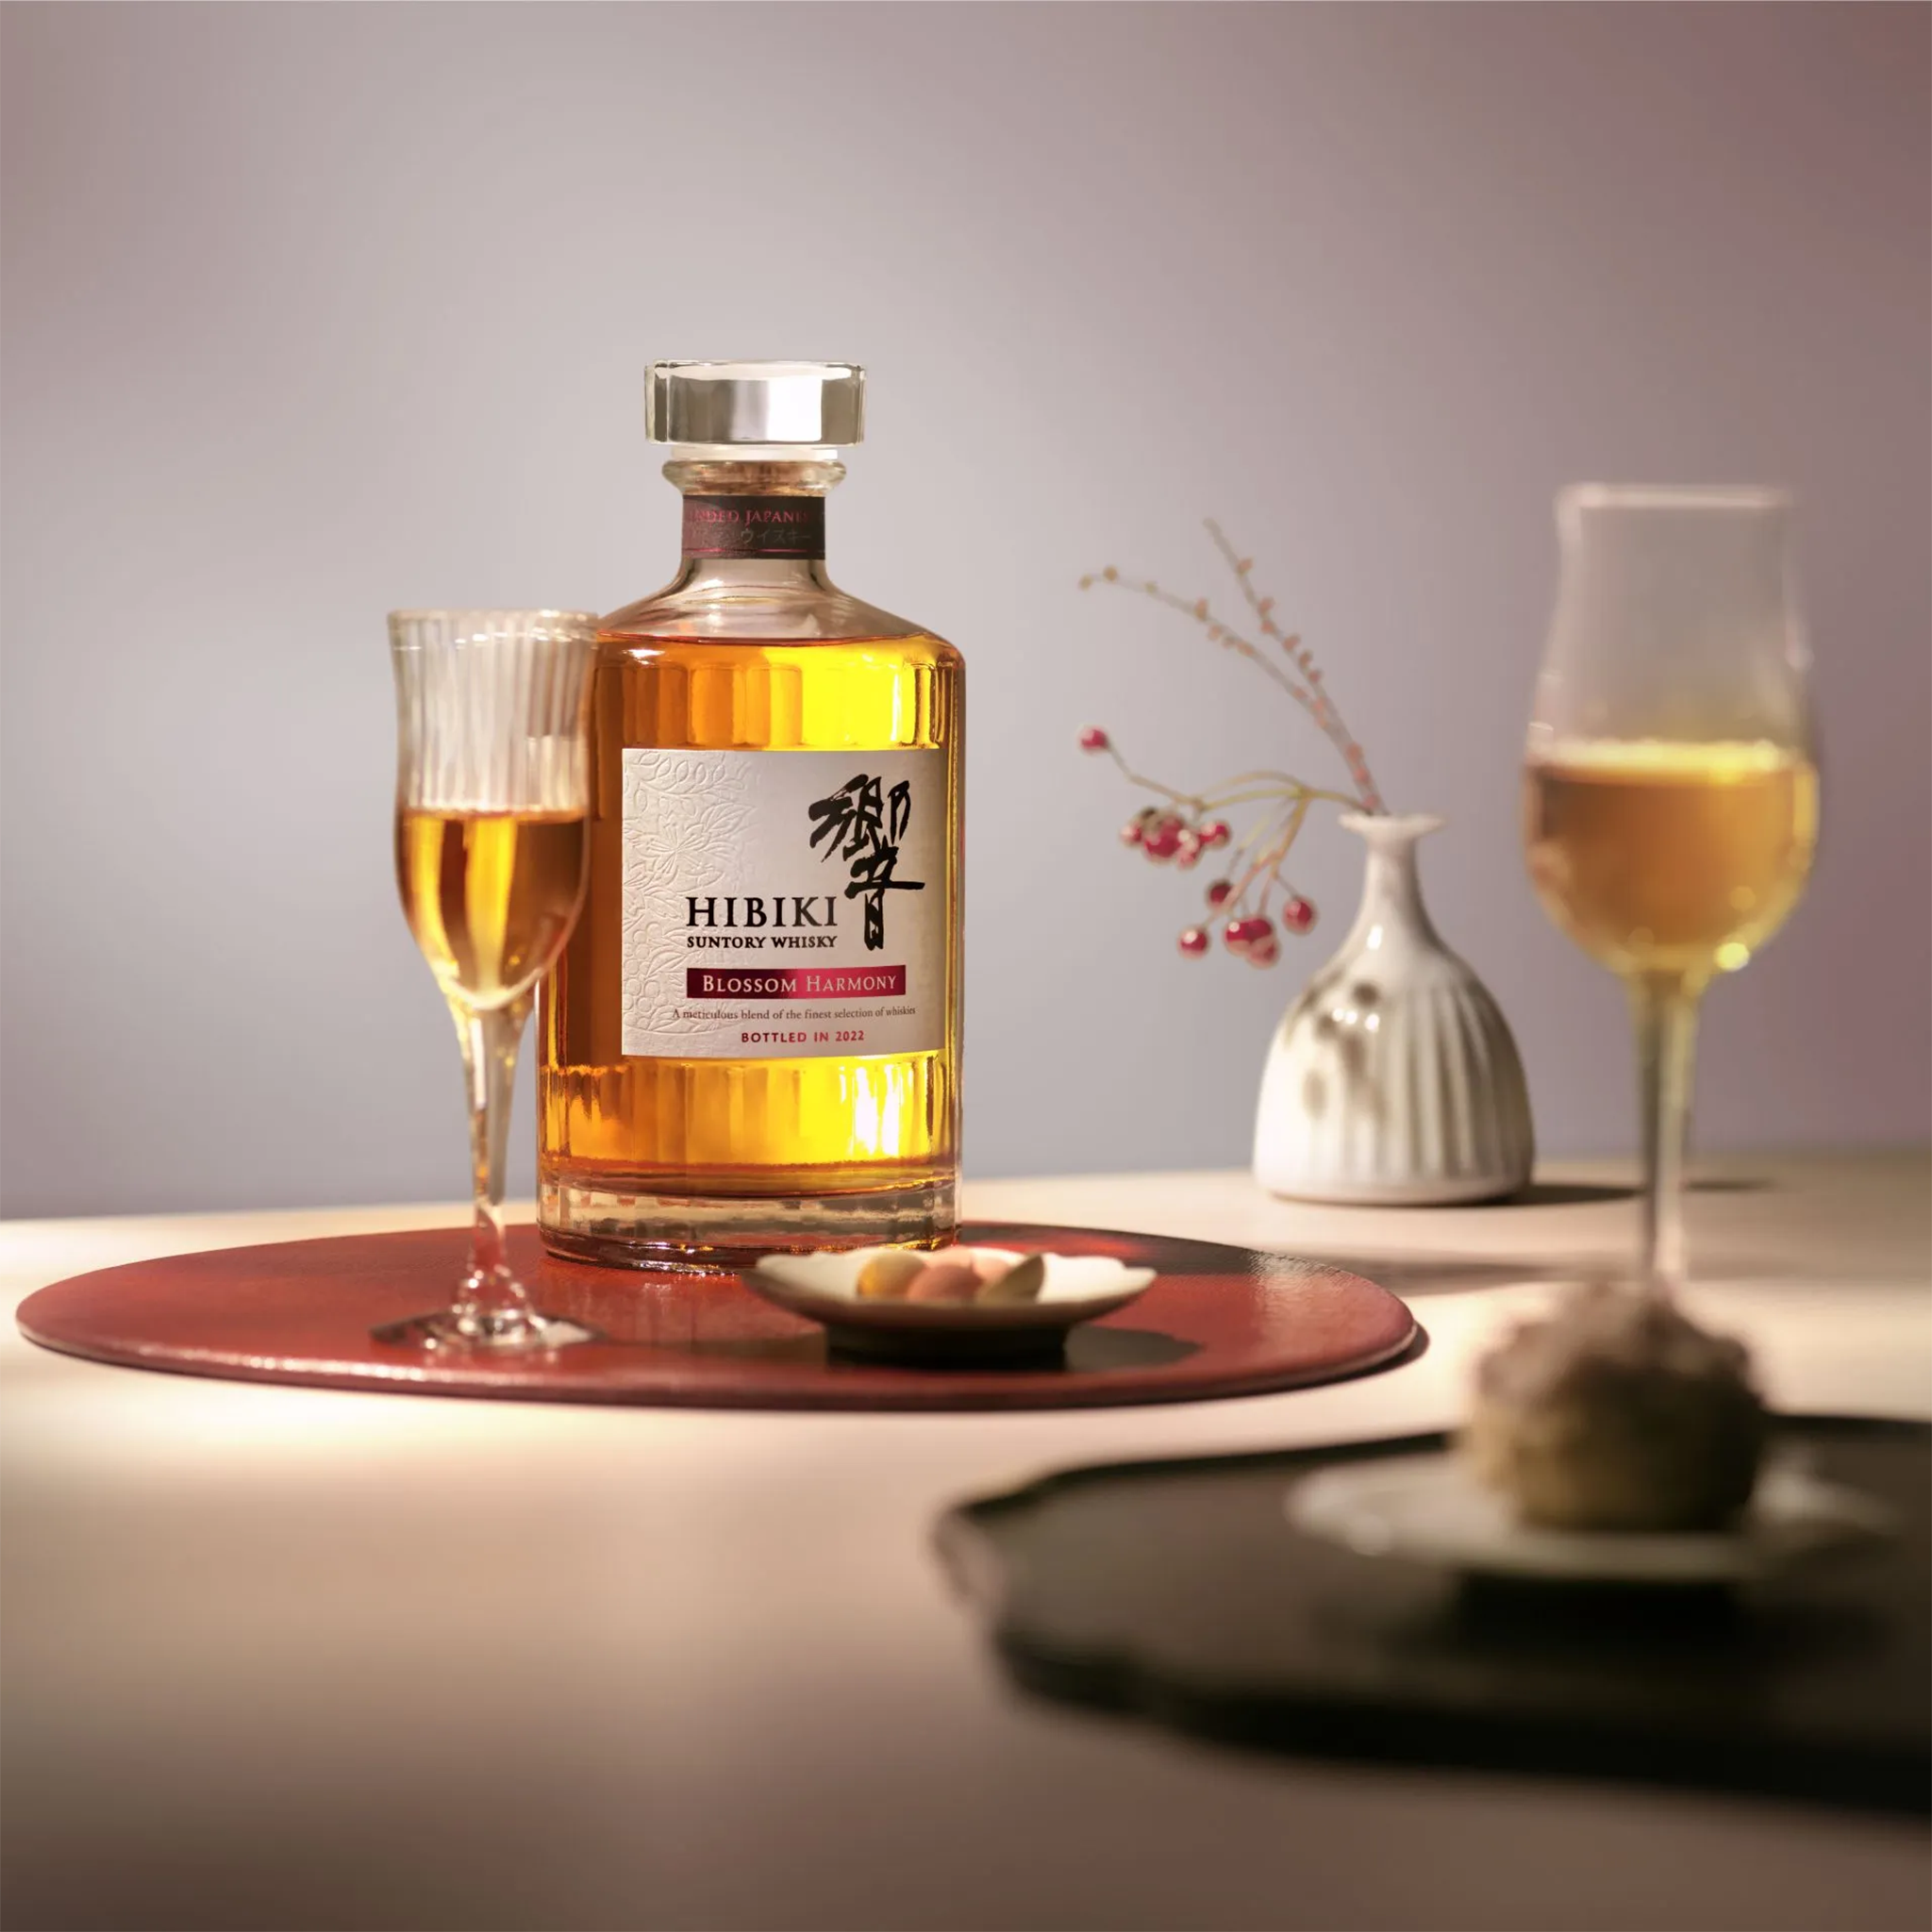 Hibiki Blossom Harmony Whisky 2023 Release | Kent Street Cellars